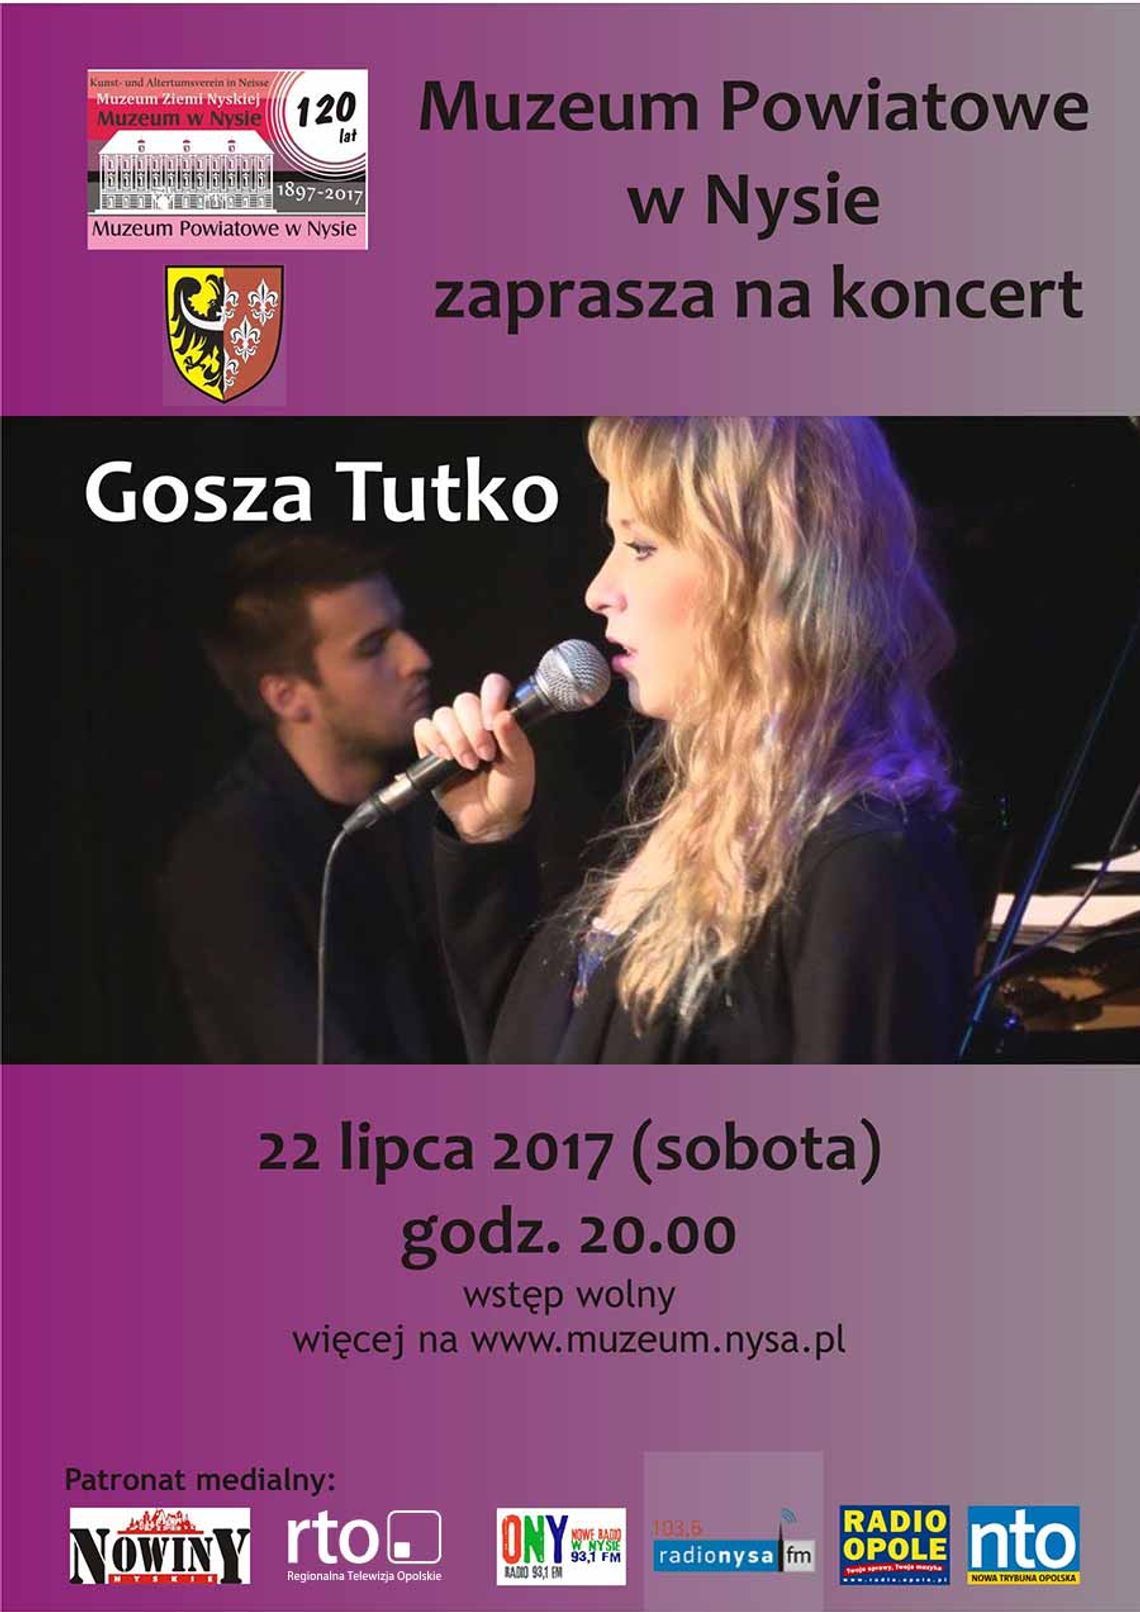 Gosza Tutko - koncert, 22 lipca 2017 (sobota)